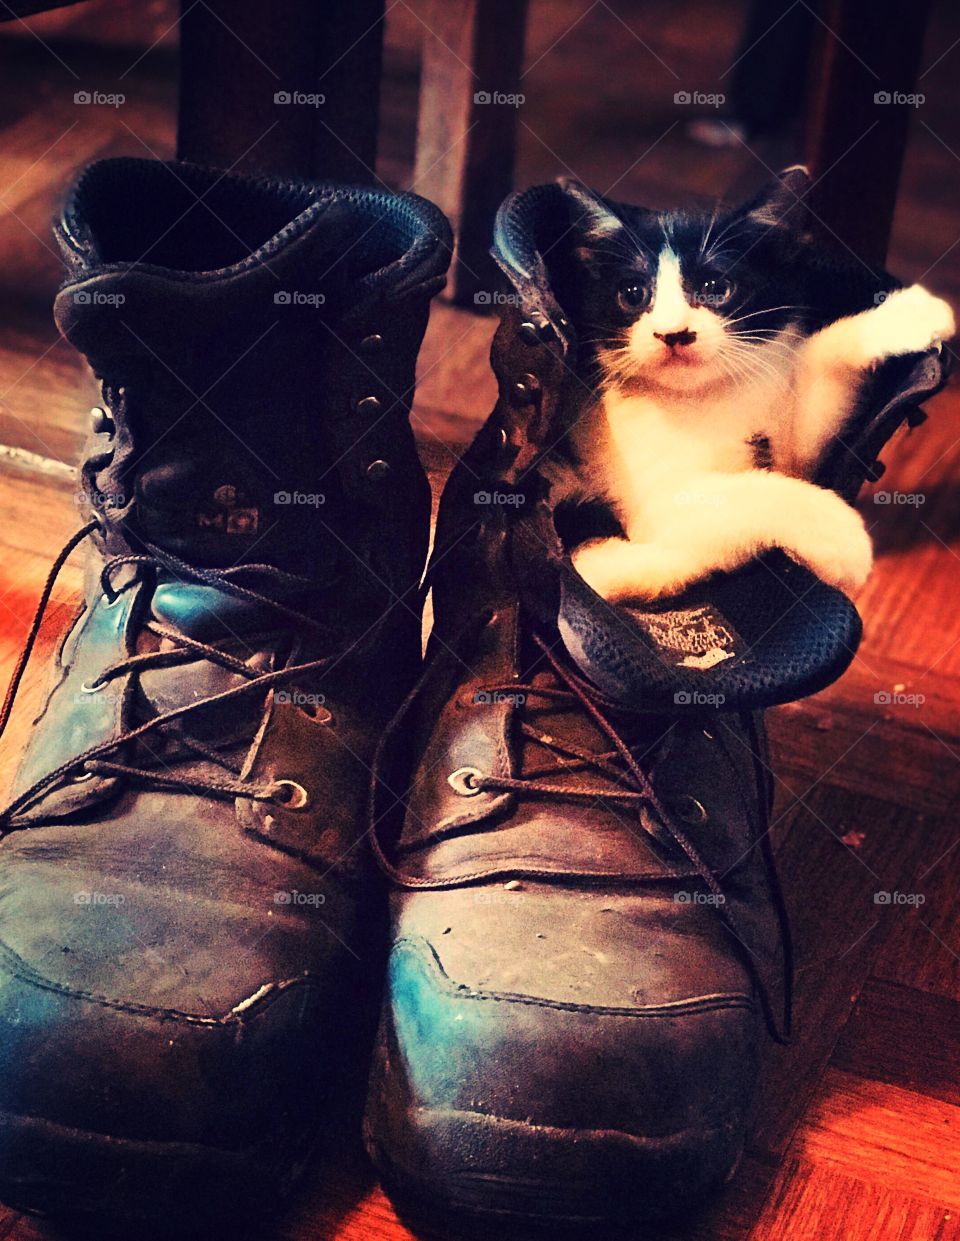 Kitten in work boot